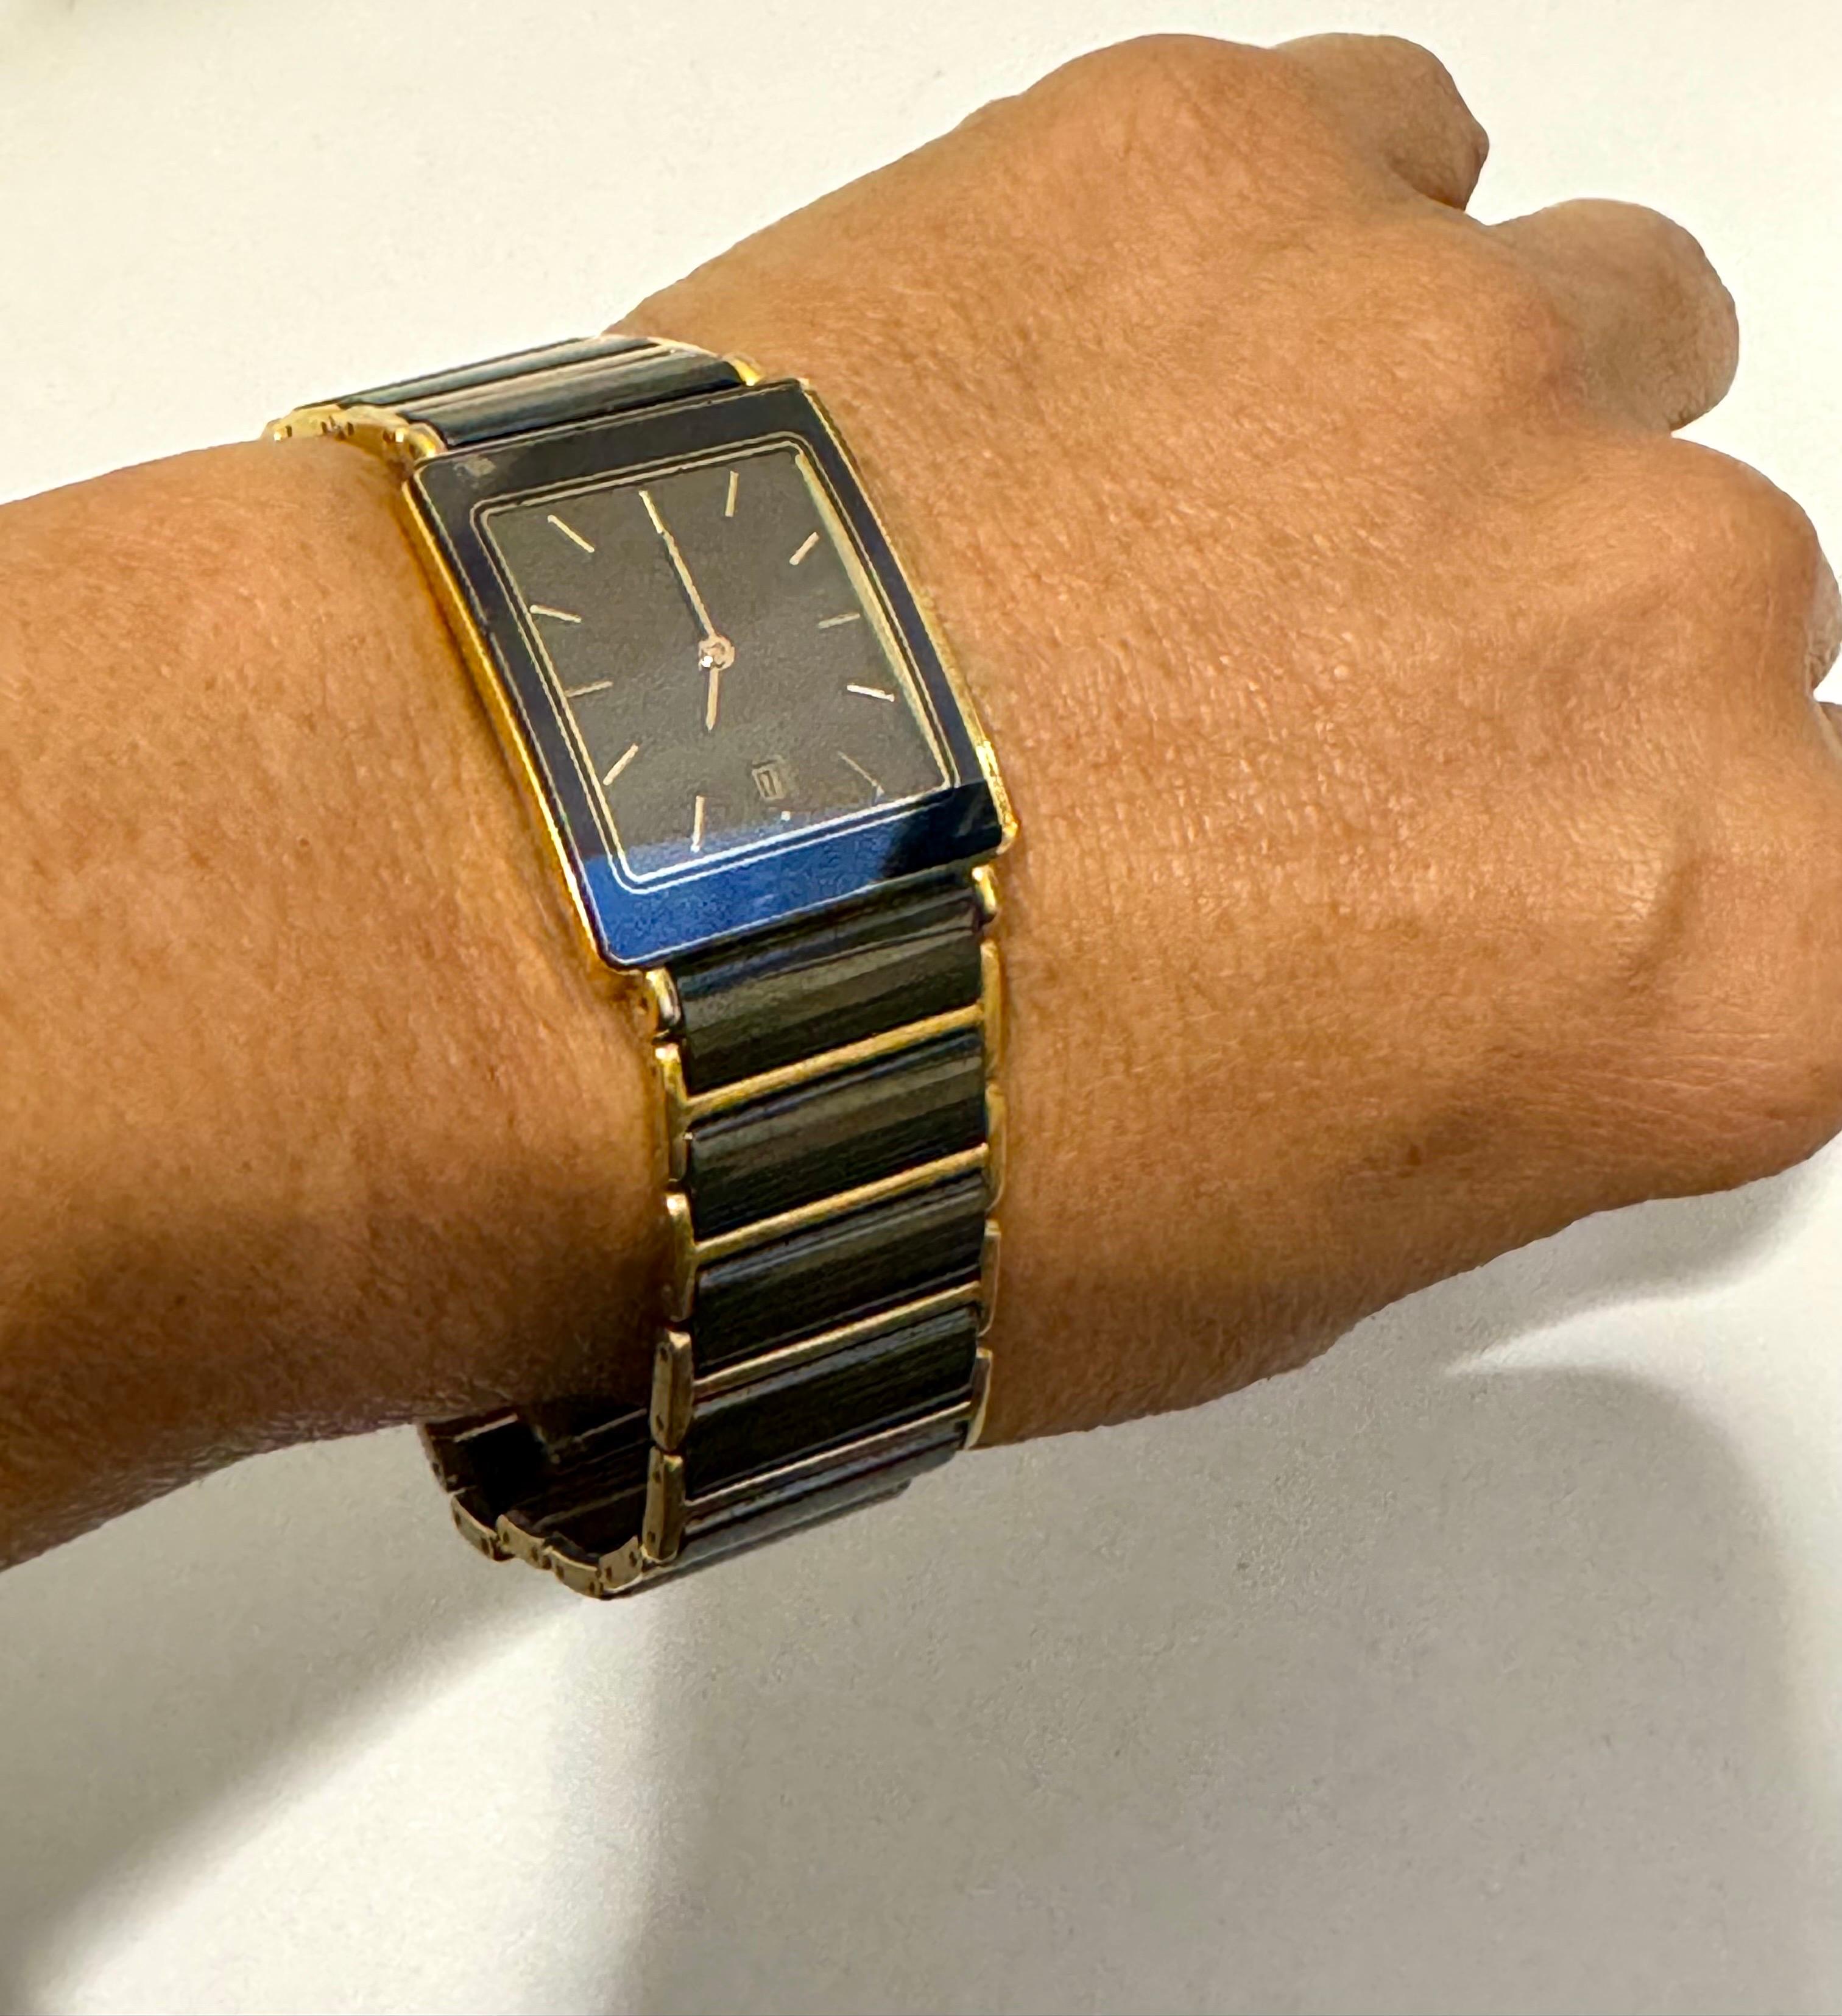 Rado DIRSTAR S bracelet watch - scratch proof, water sealed, high tech ceramics. For Sale 3